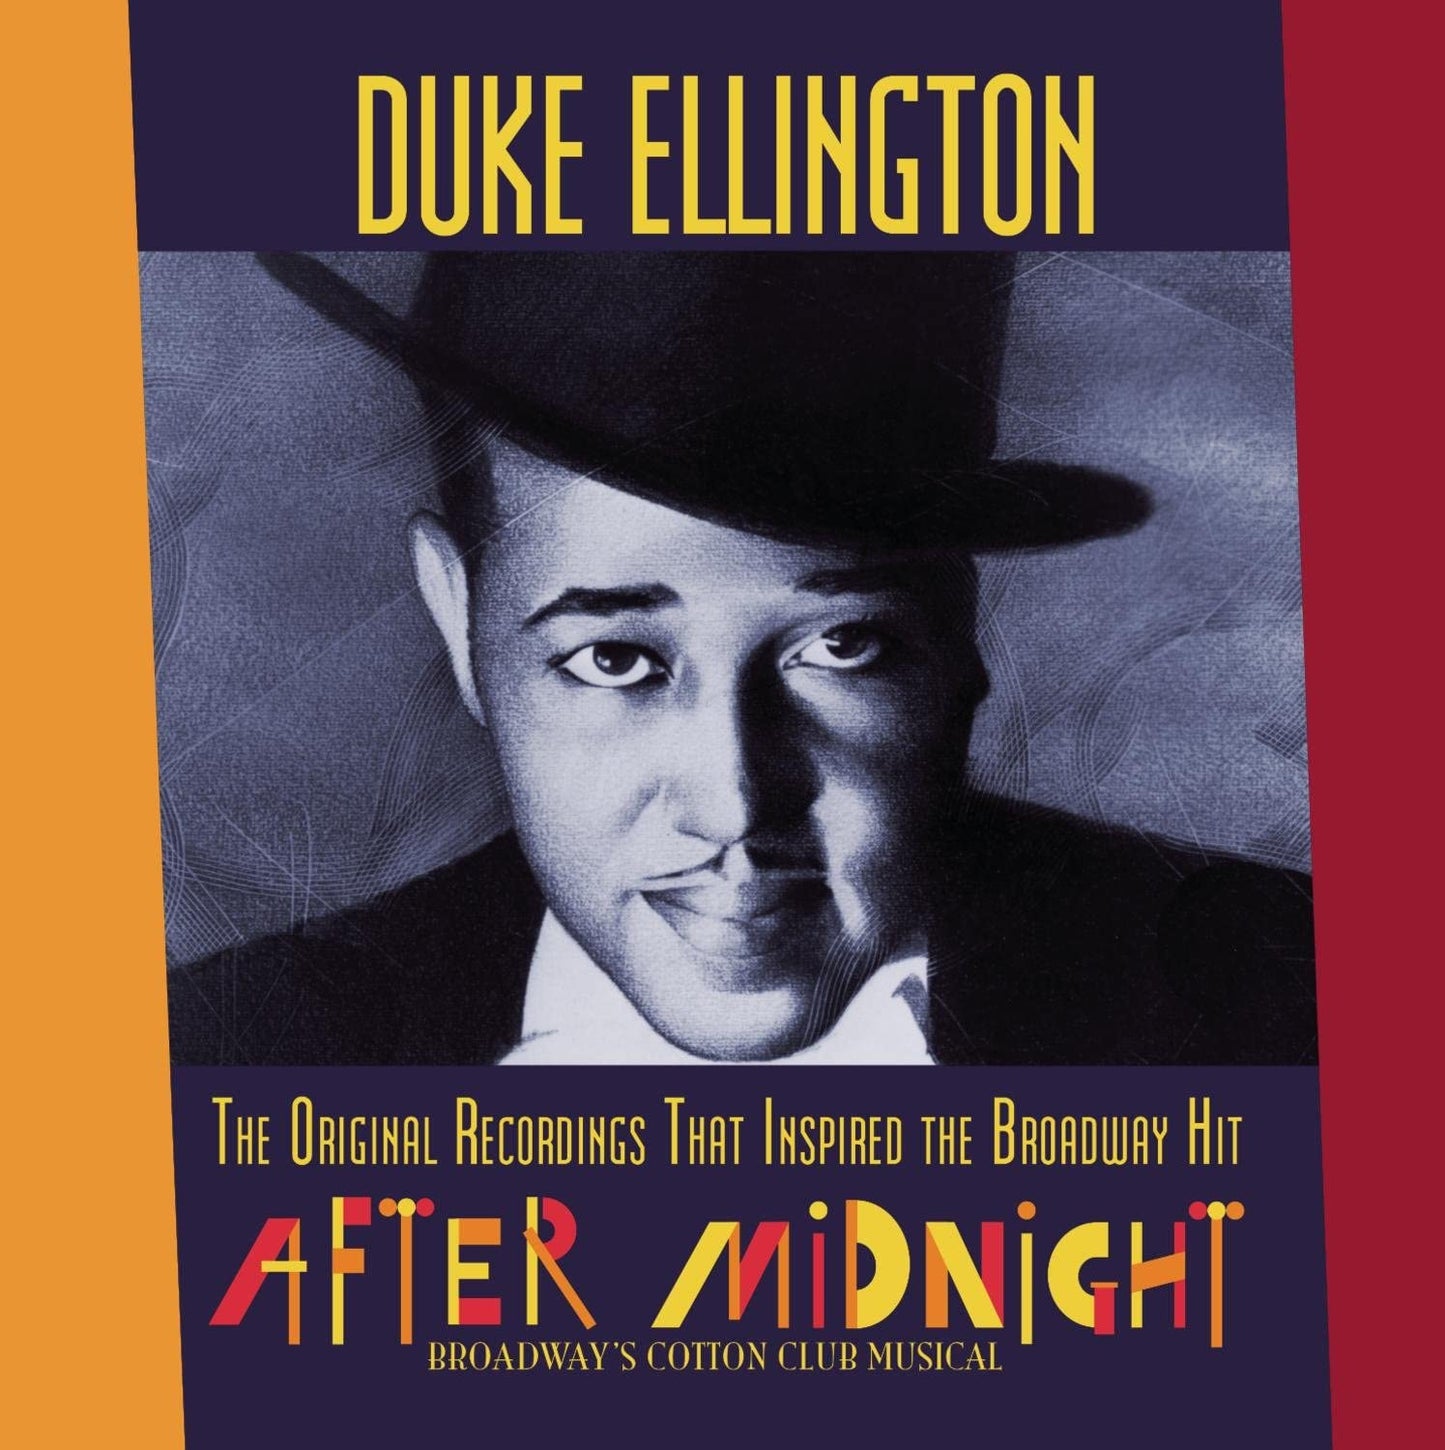 Duke Ellington - The Original Recordings That Inspired After Midnight - CD